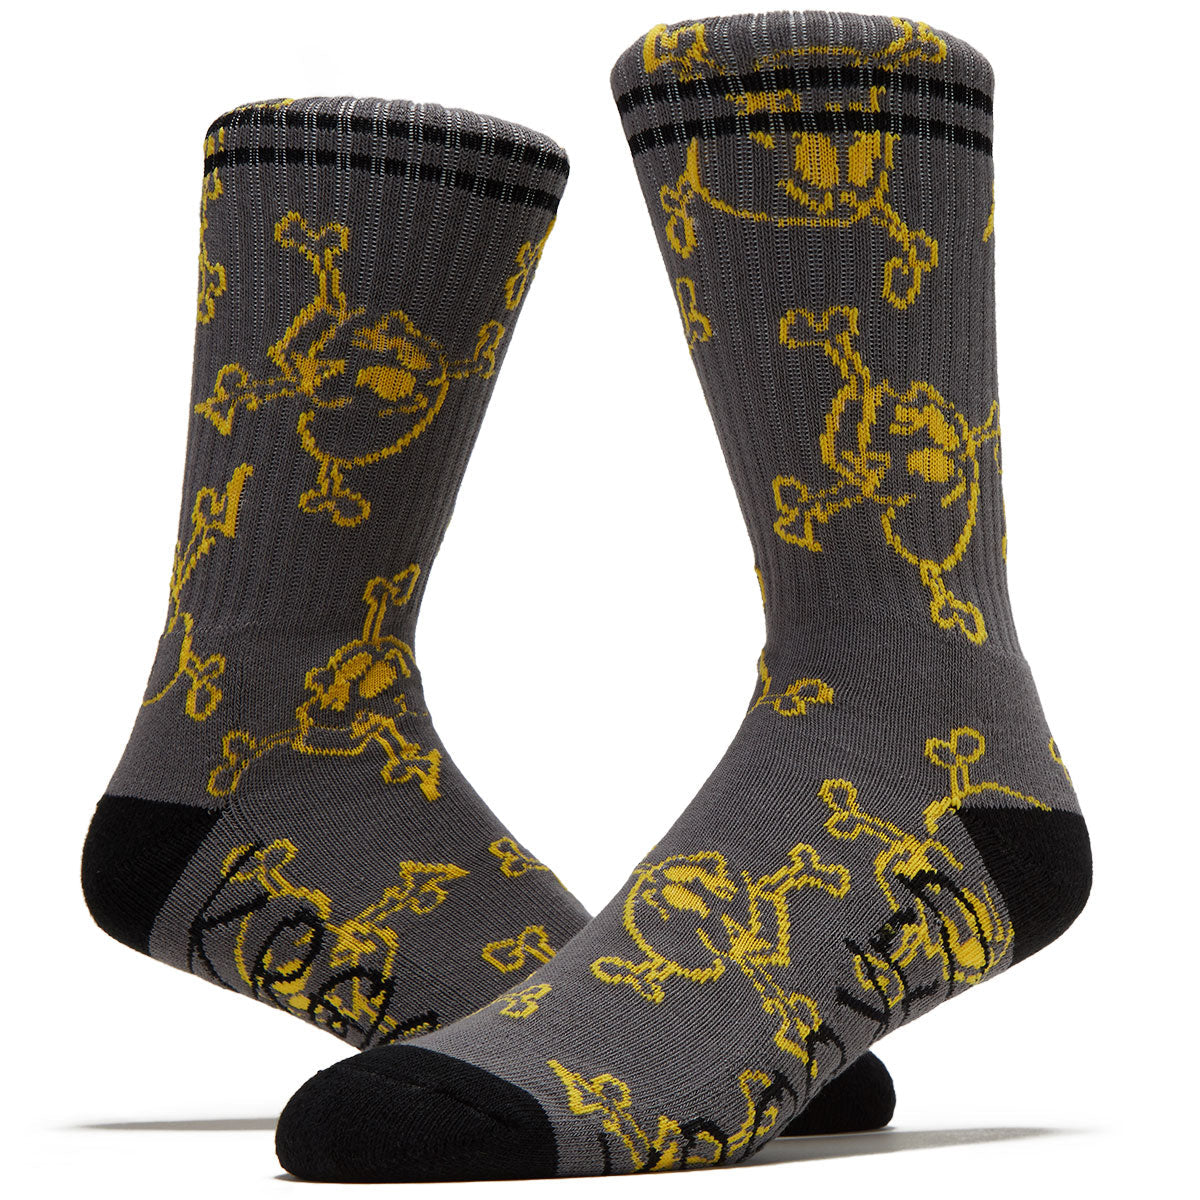 Krooked Style Socks - Charcoal/Yellow/Black image 2